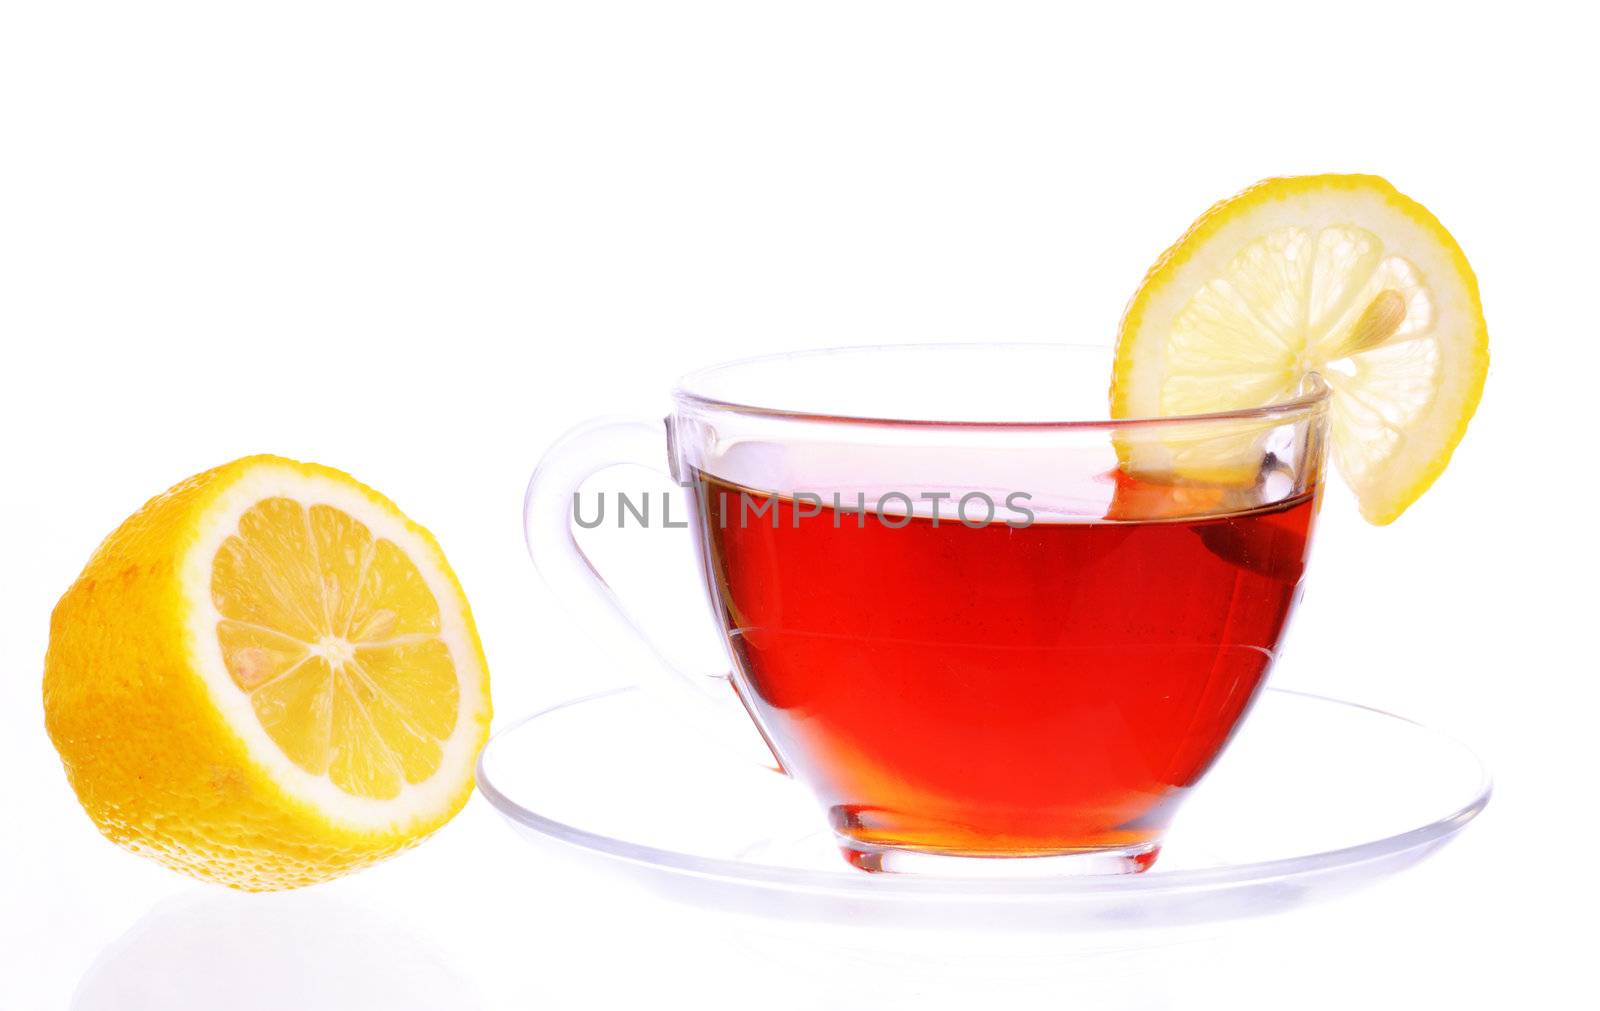 Transparent cup with black tea with a lemon